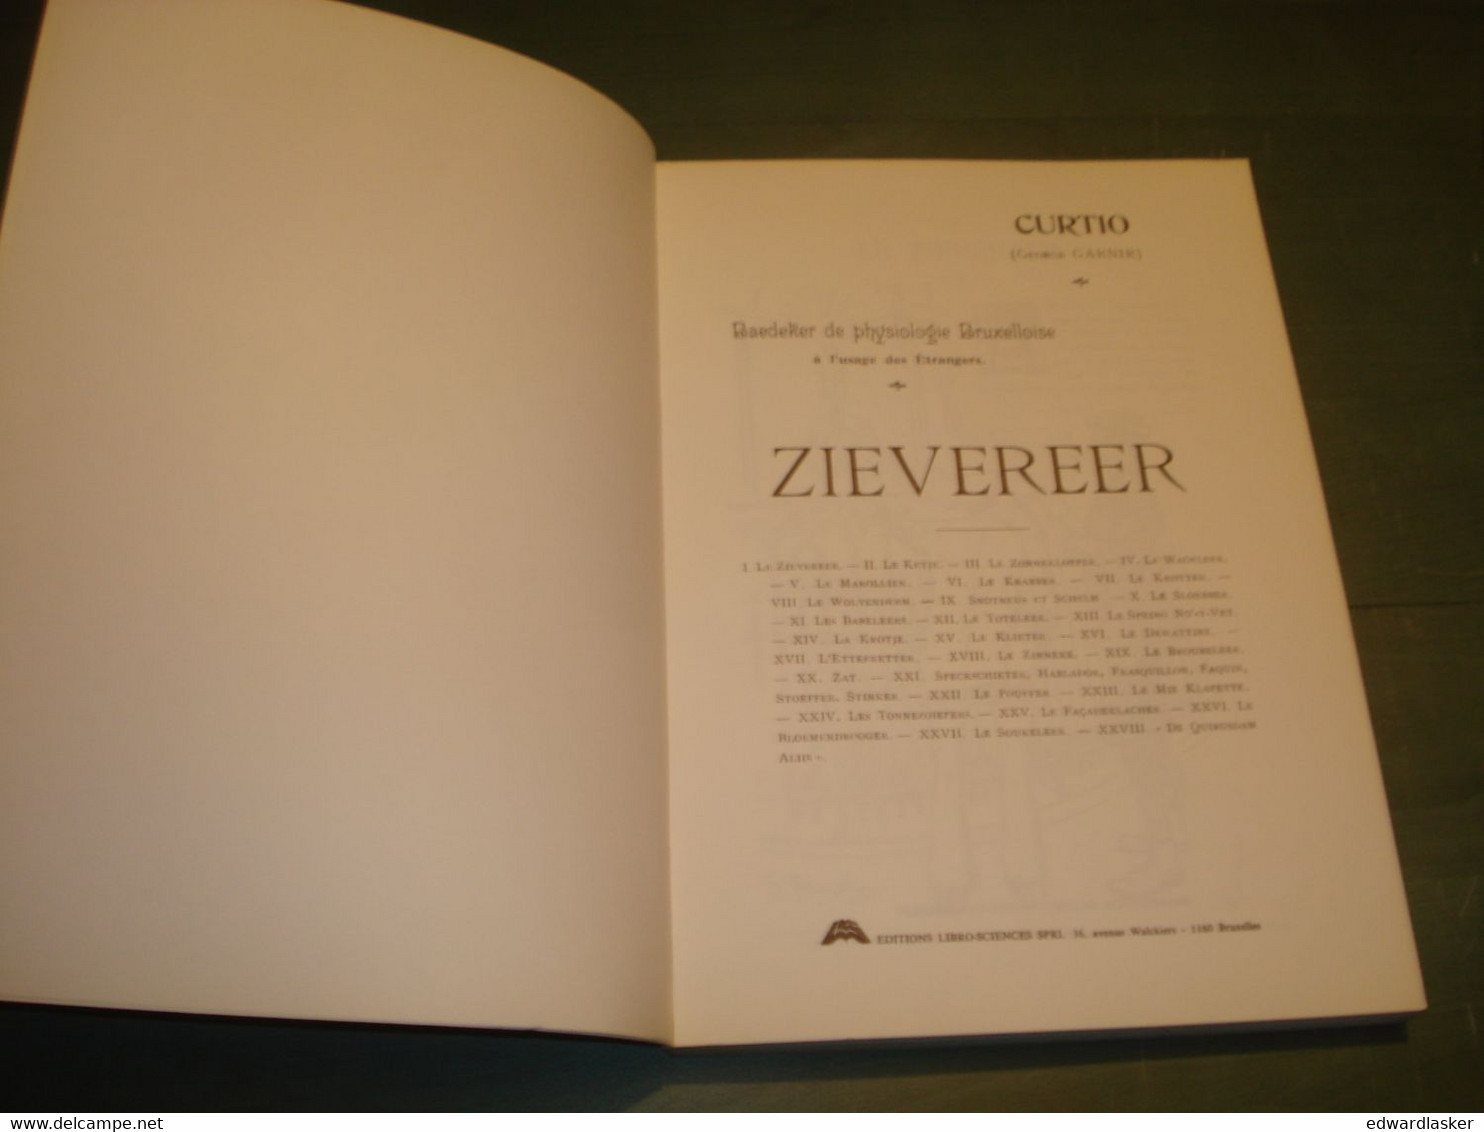 ZIEVEREER - KROTT & Cie - ARCHITEK ! - Curtio - Ill. Amédée LYNEN - 1975 - Belgium